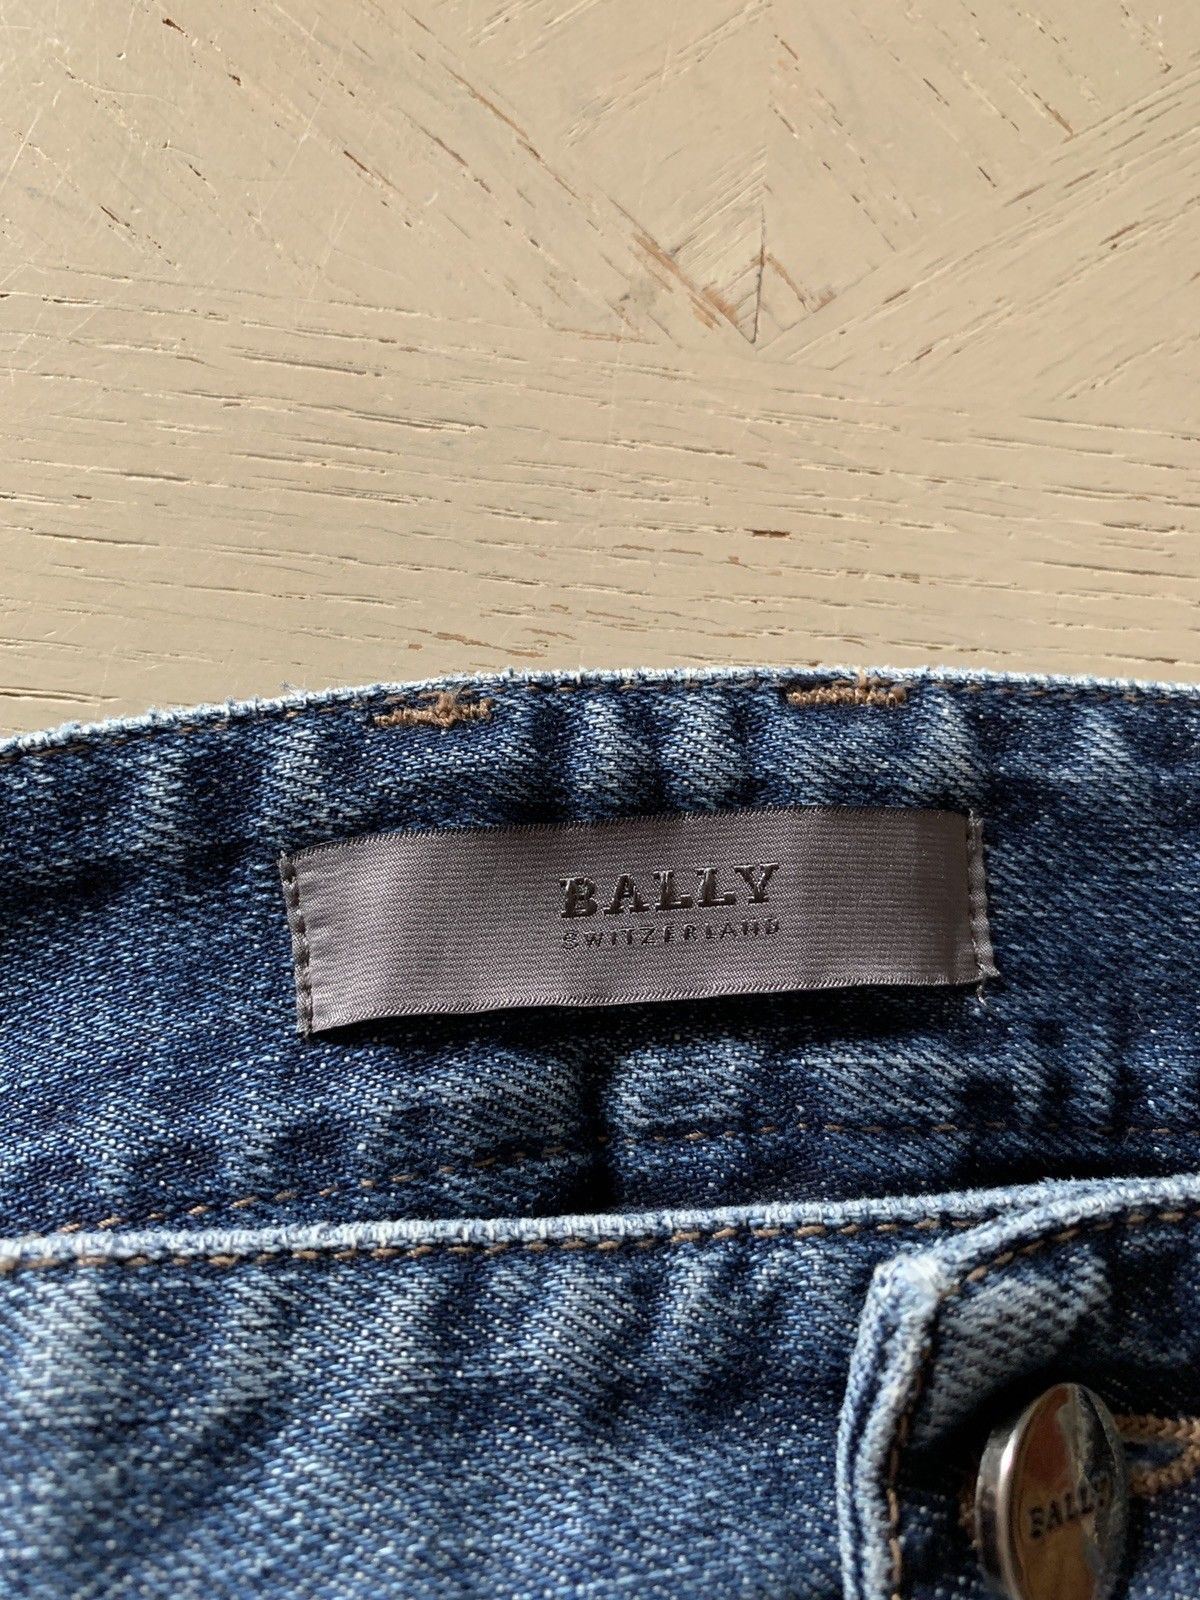 New $550 Bally Women's Jeans Pants Blue 8 US ( 40 Eu ) Italy